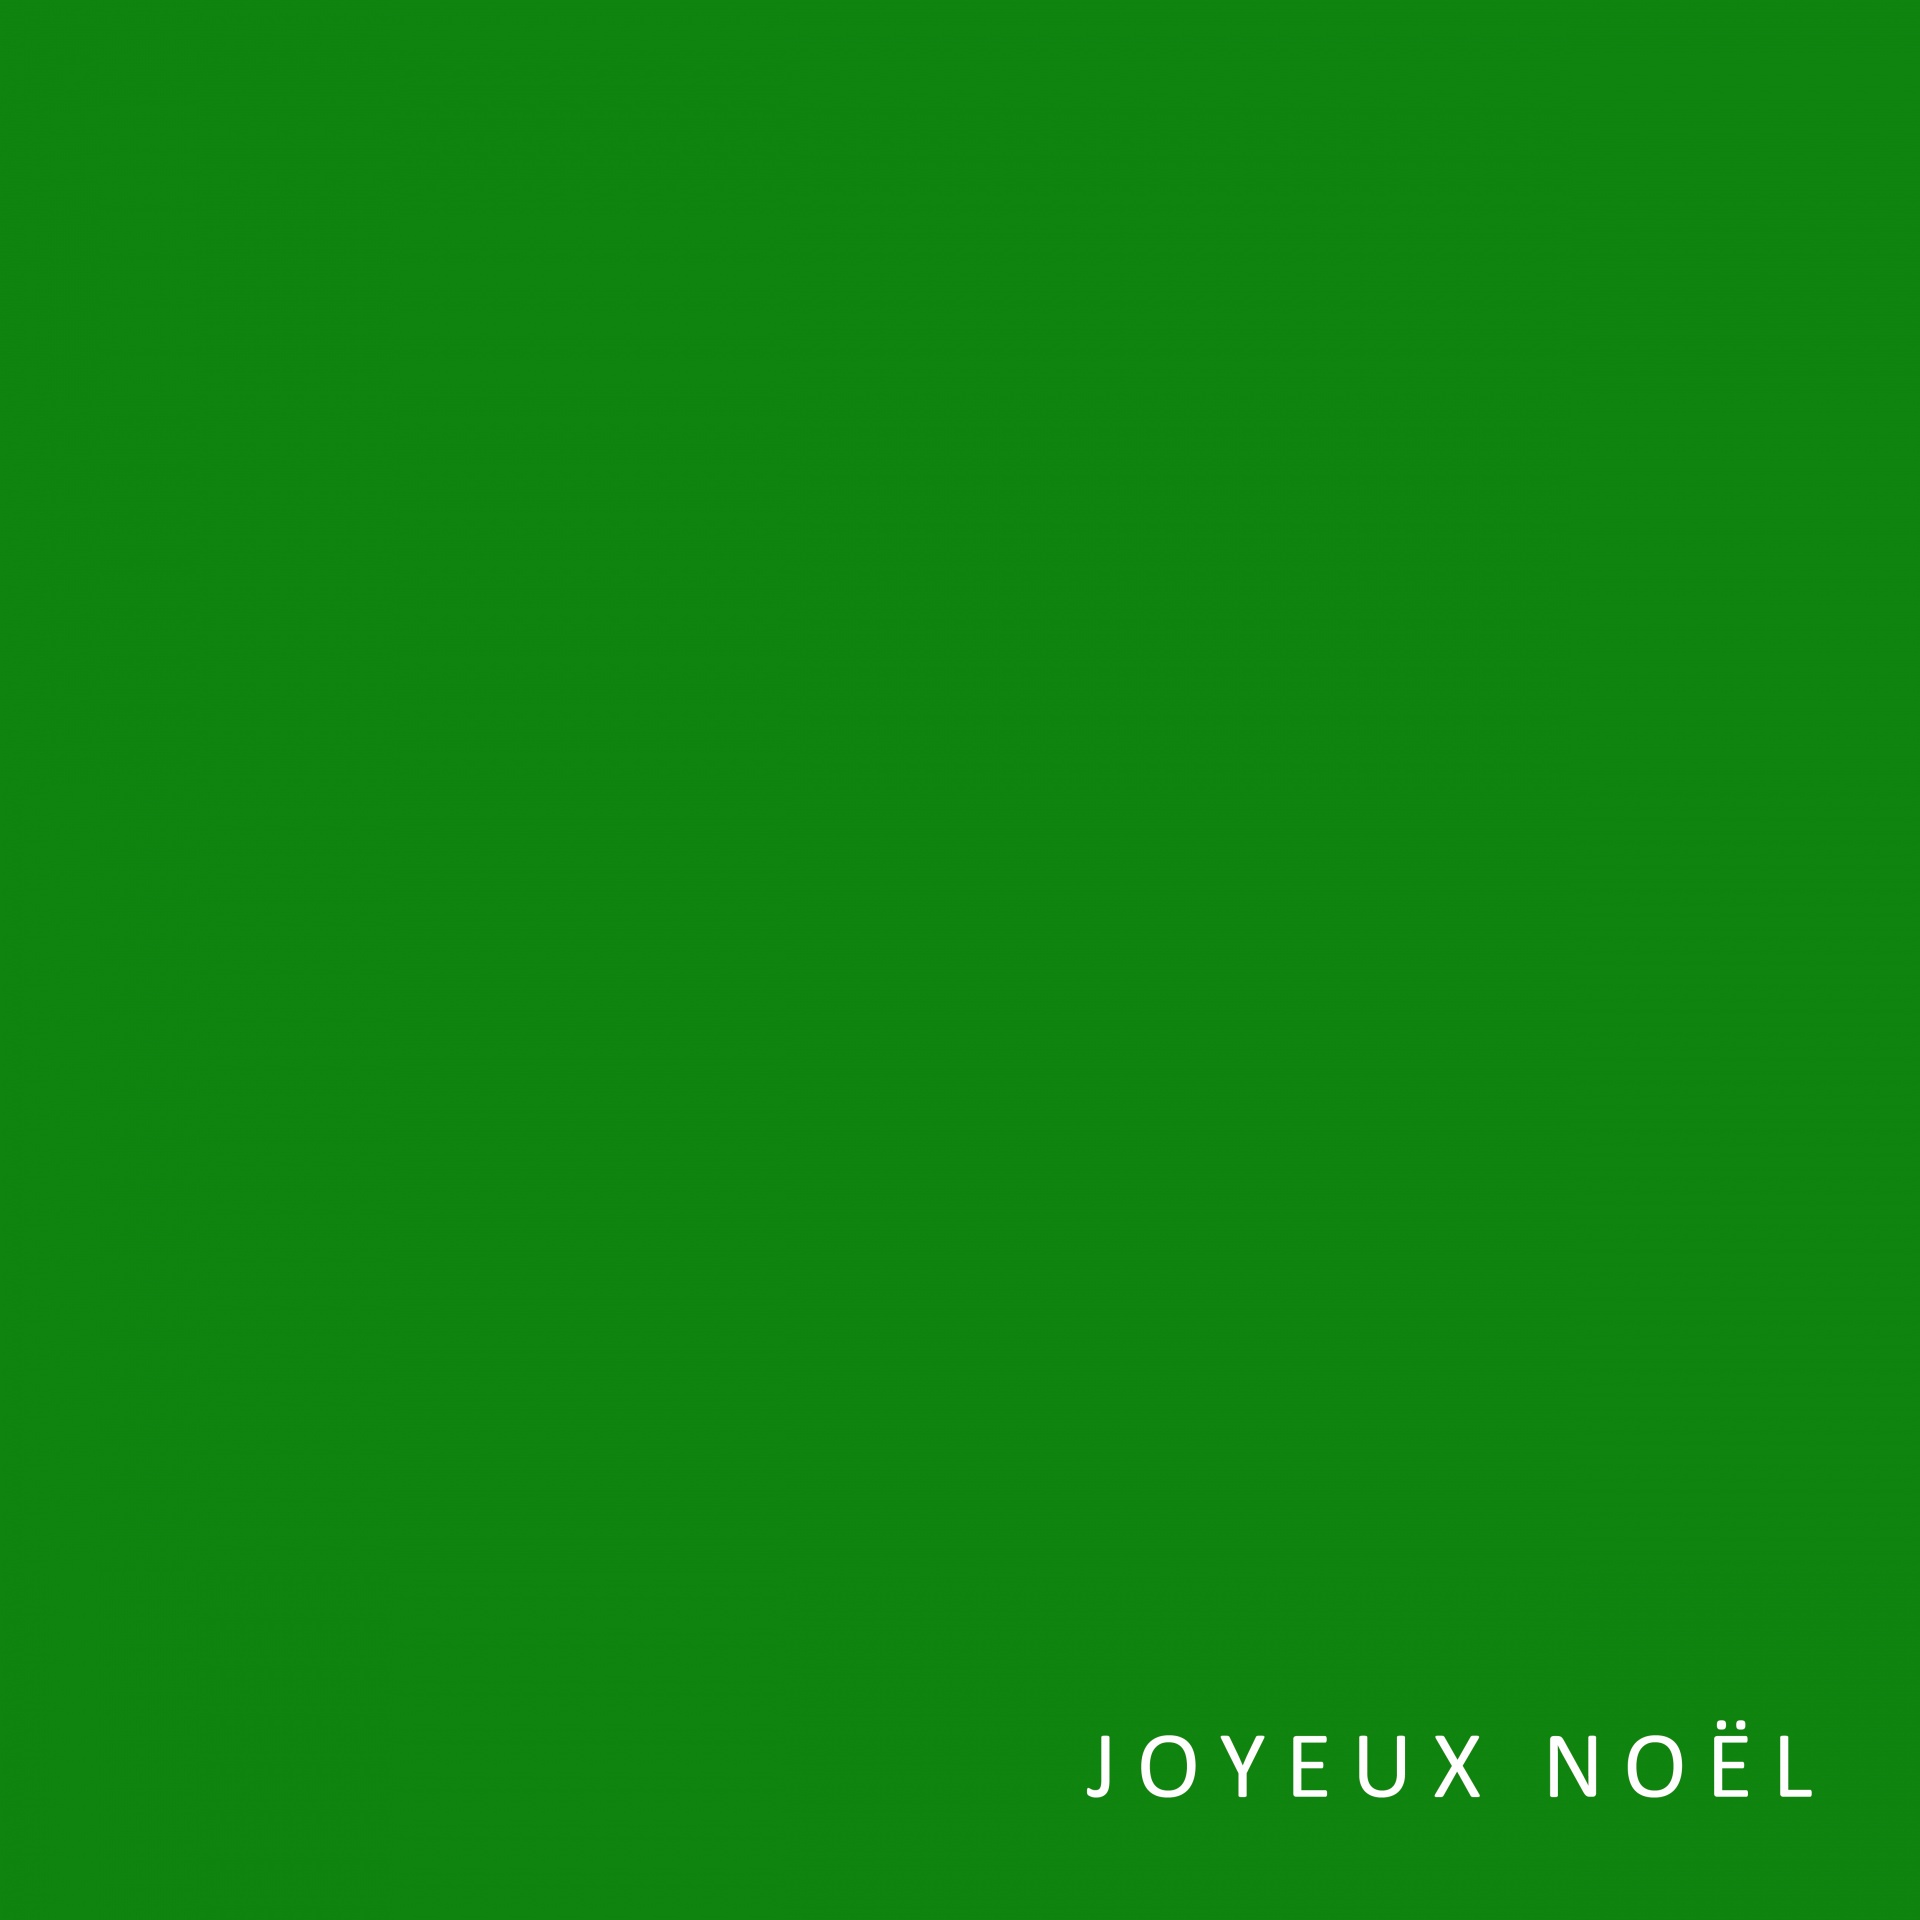 joyeux noël green background free photo